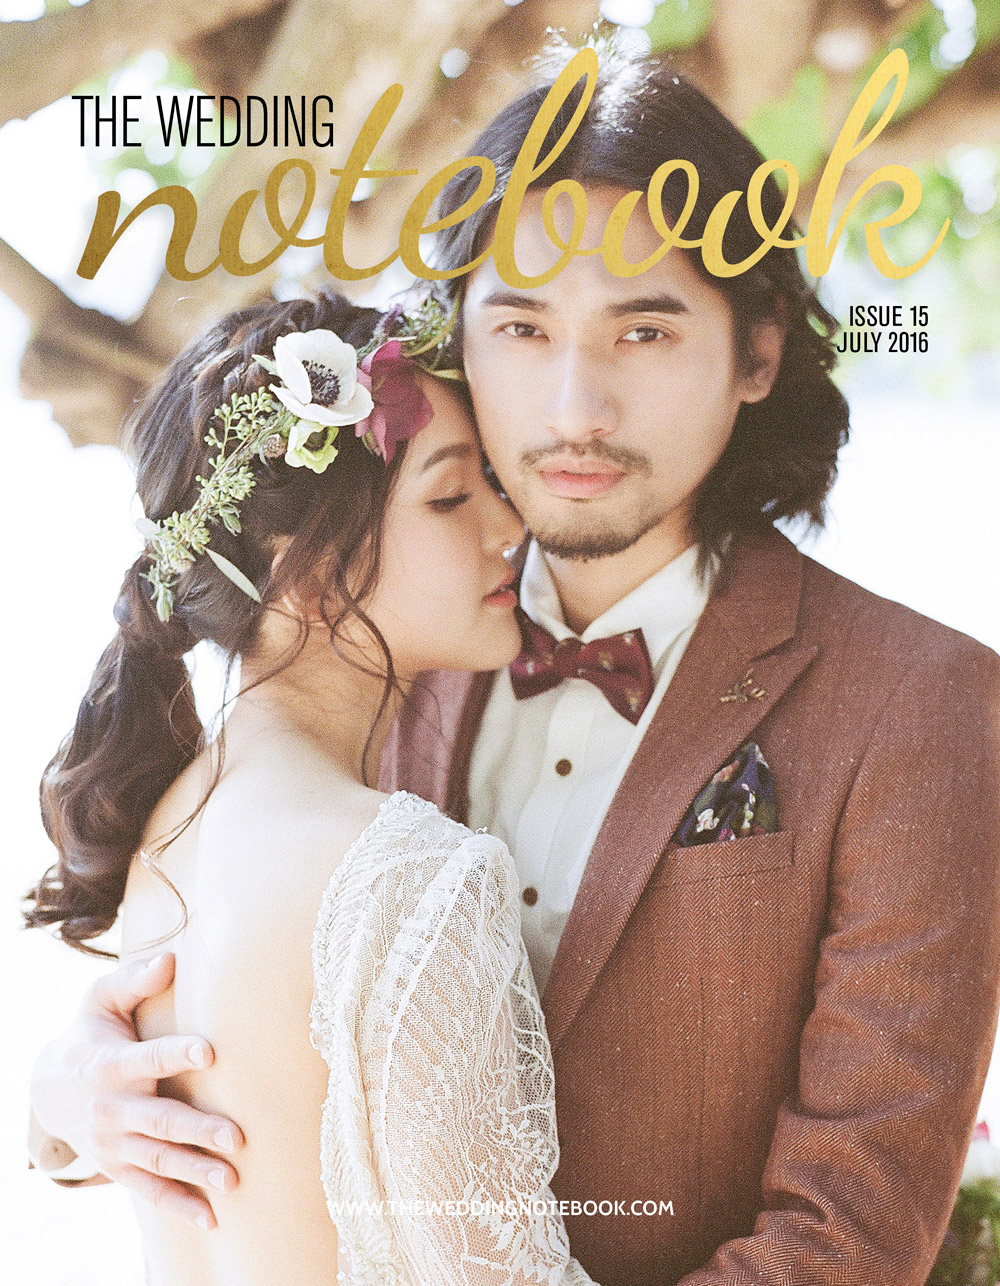 The Wedding Notebook magazine July 2016. www.theweddingnotebook.com